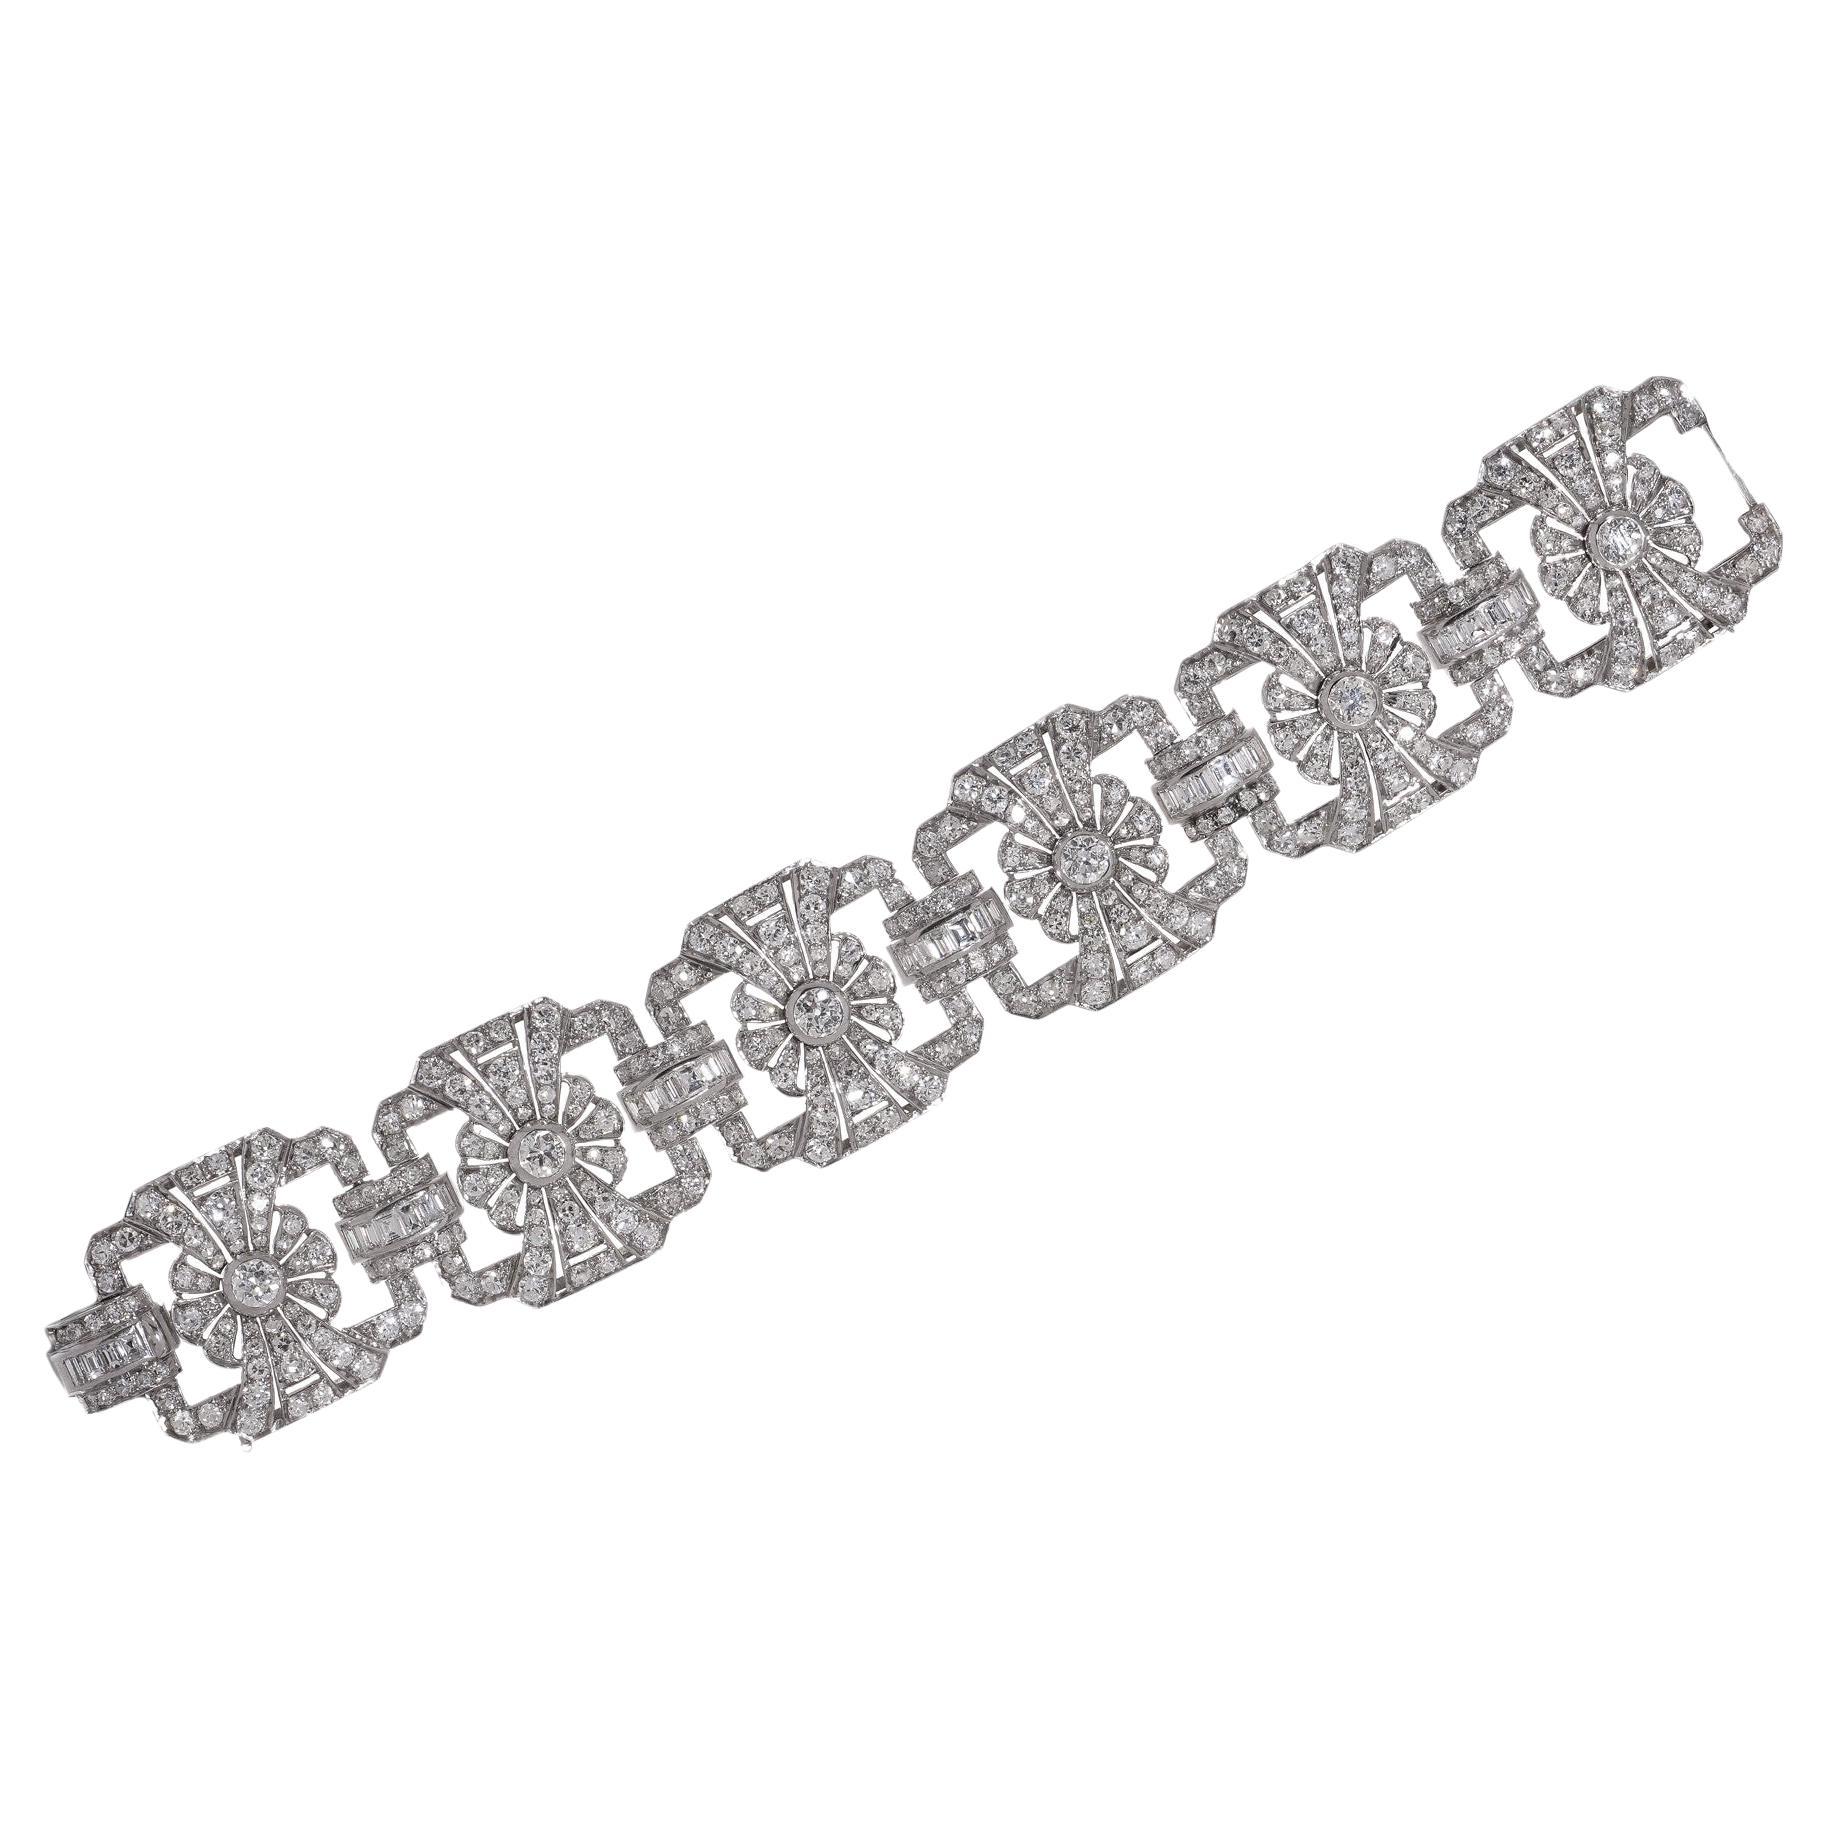 Art Deco platinum 17.80 carats of diamonds floral design link bracelet